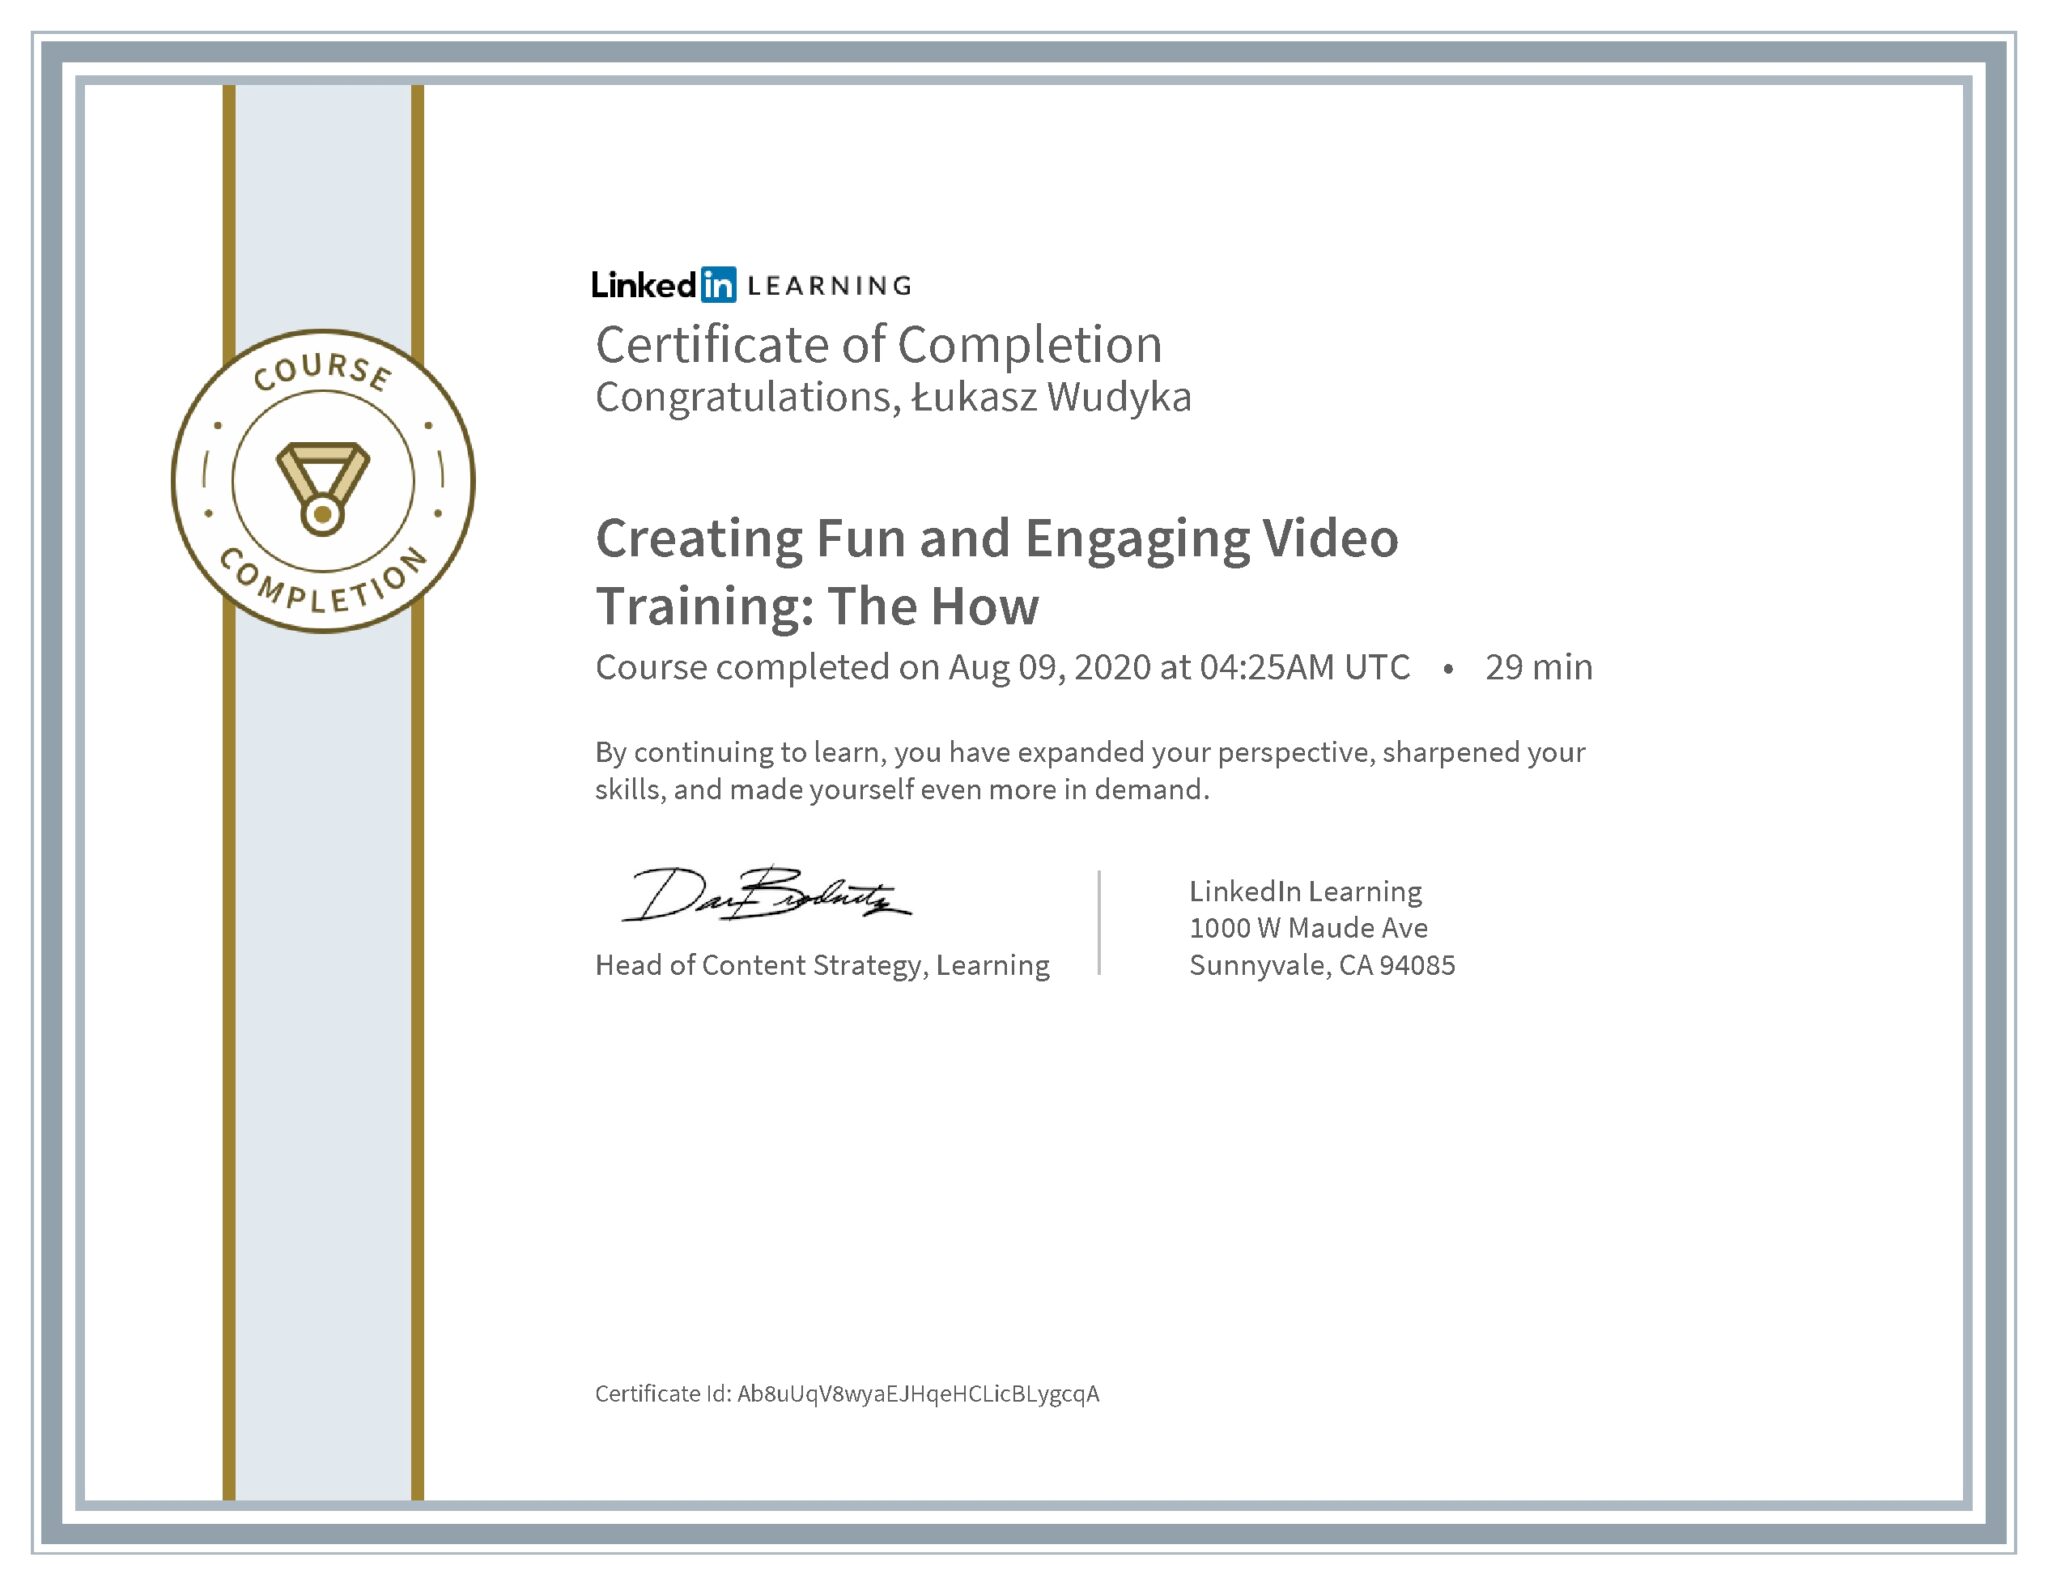 Łukasz Wudyka certyfikat LinkedIn Creating Fun and Engaging Video Training: The How